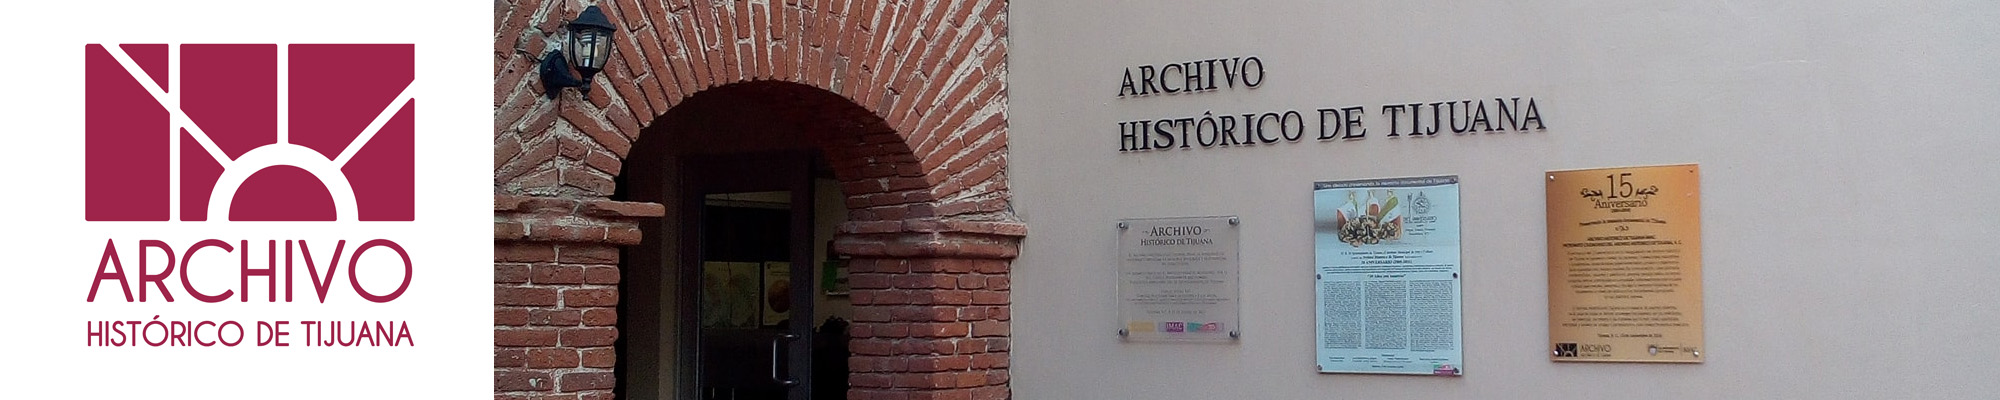 outside of Archivo Historico de Tijuana